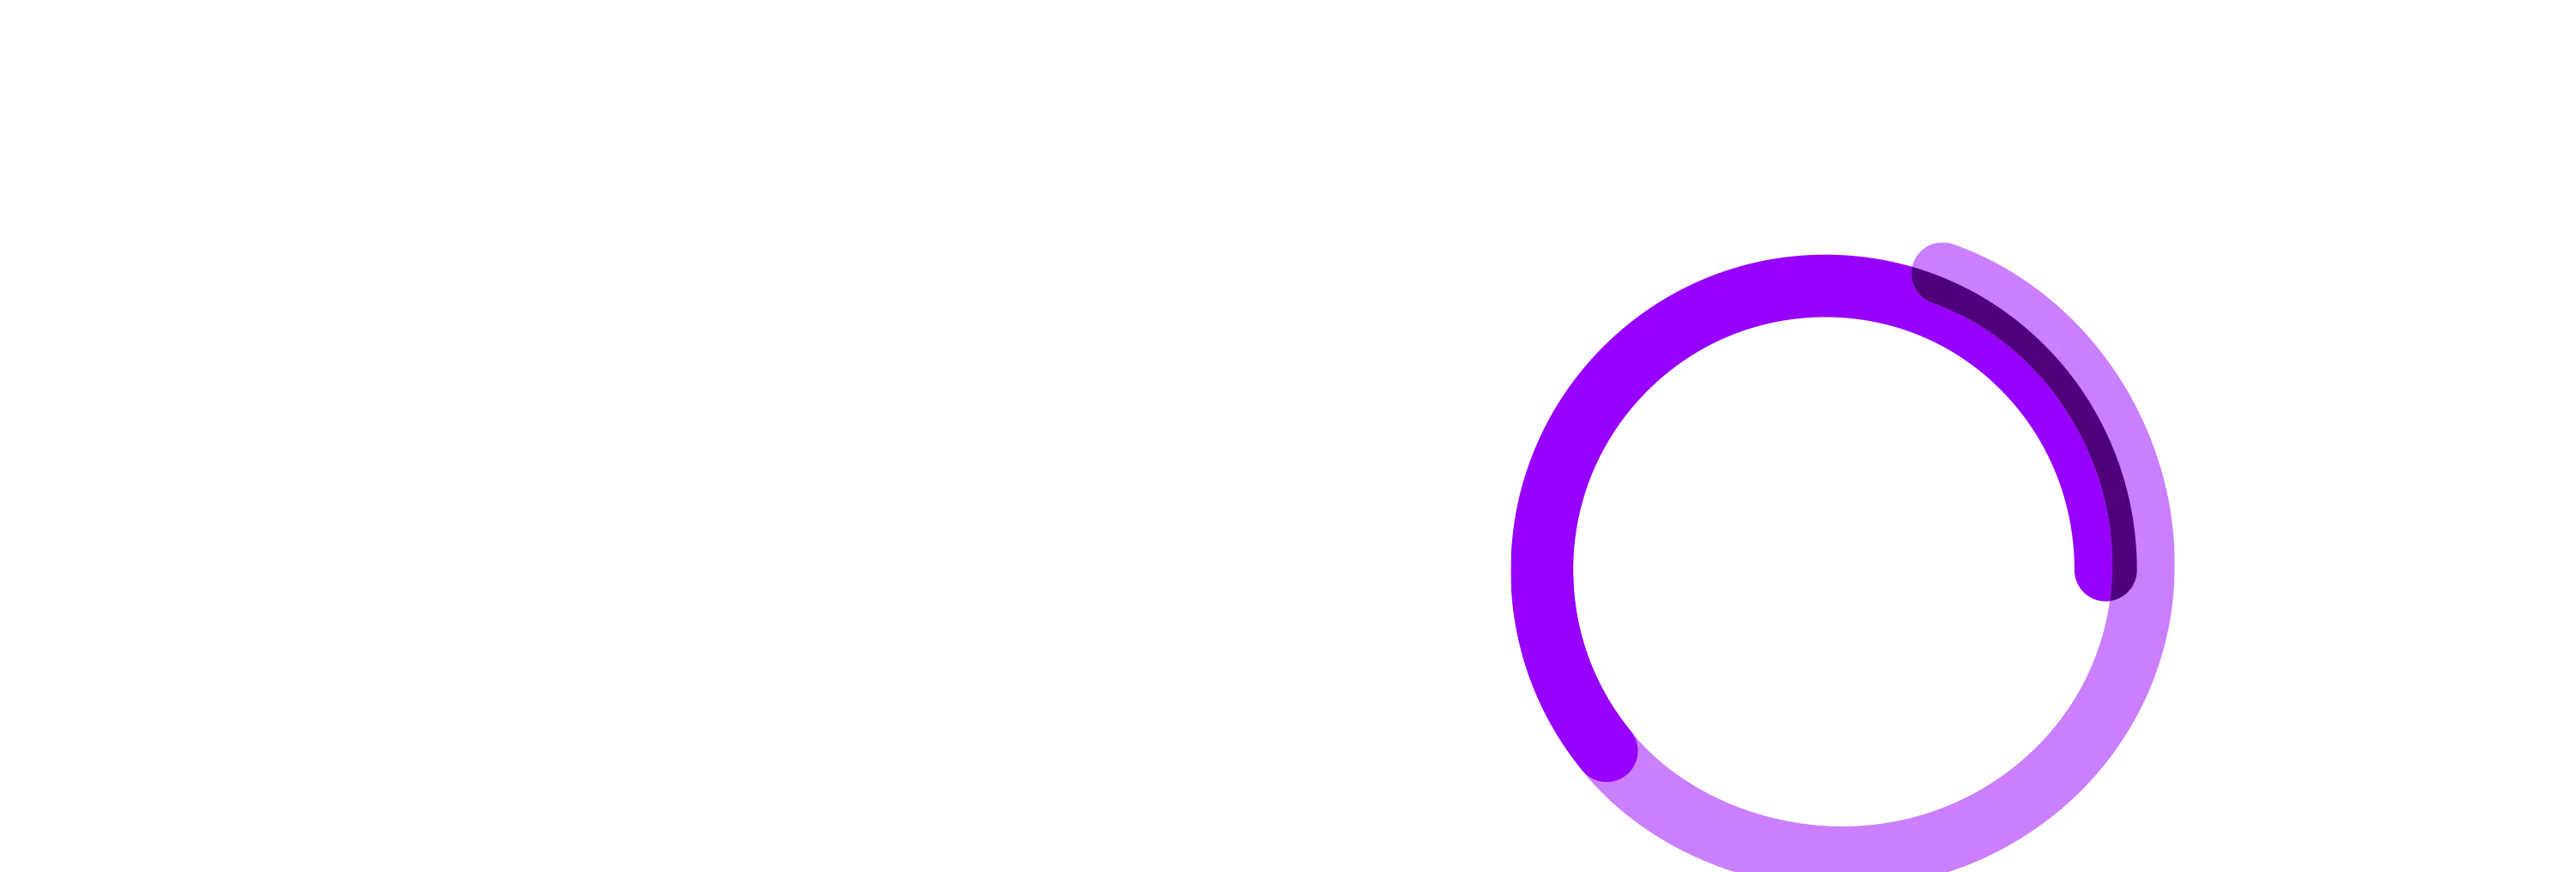 purple spiral circle illustration